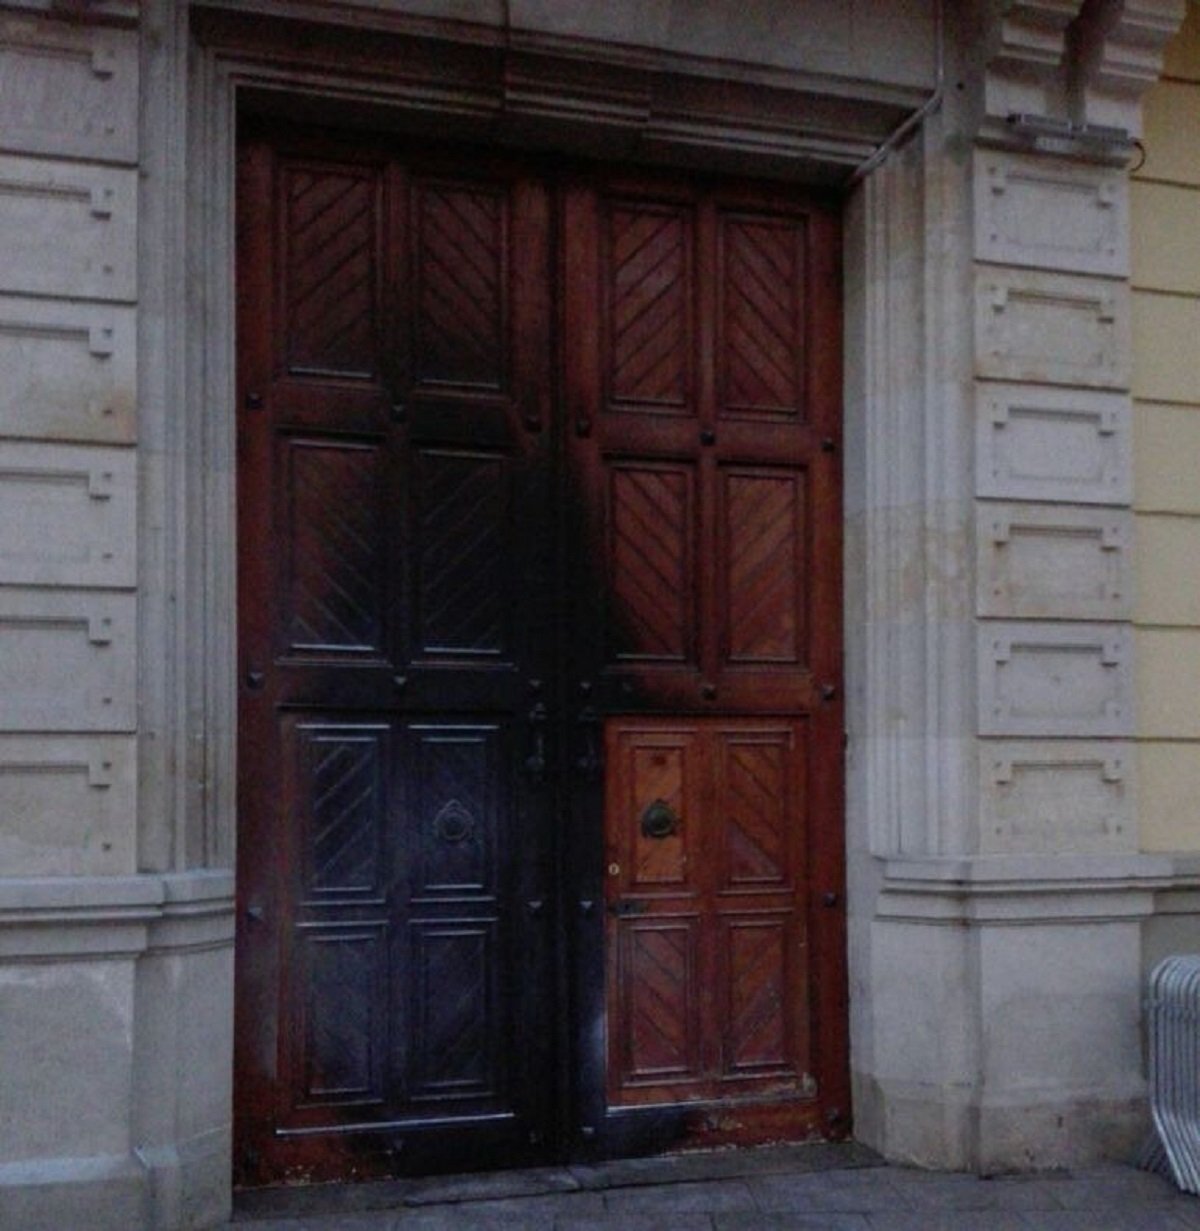 Queman la puerta principal del Ayuntamiento del Hospitalet de Llobregat